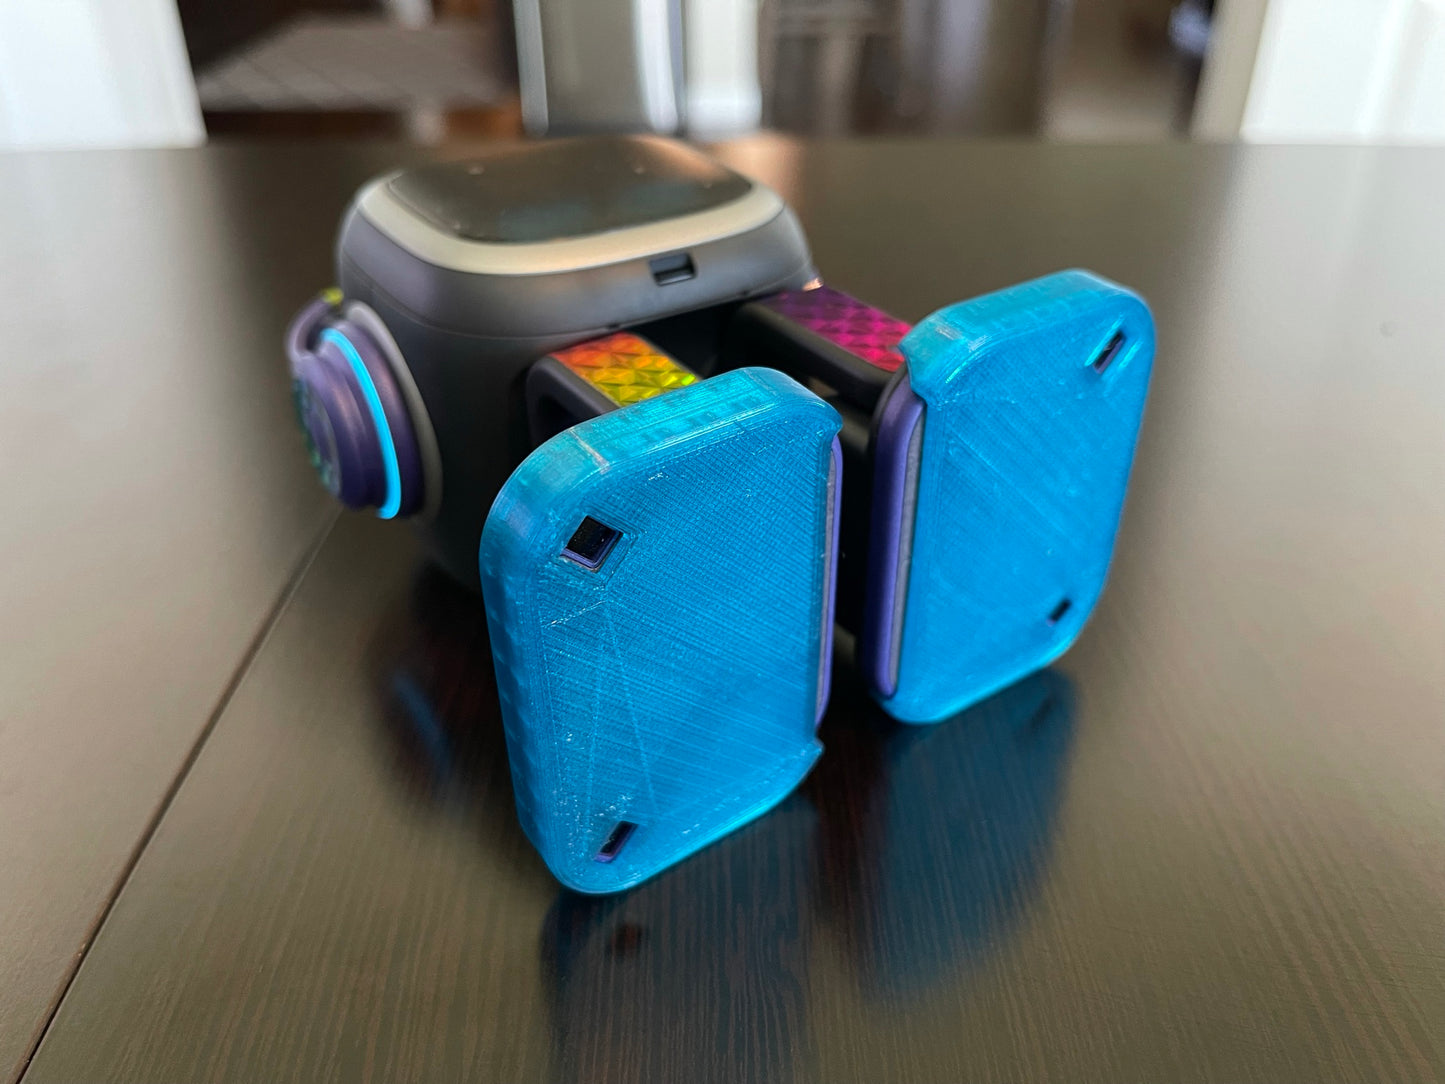 EMO Pet Robot Shoes - 3D Printed